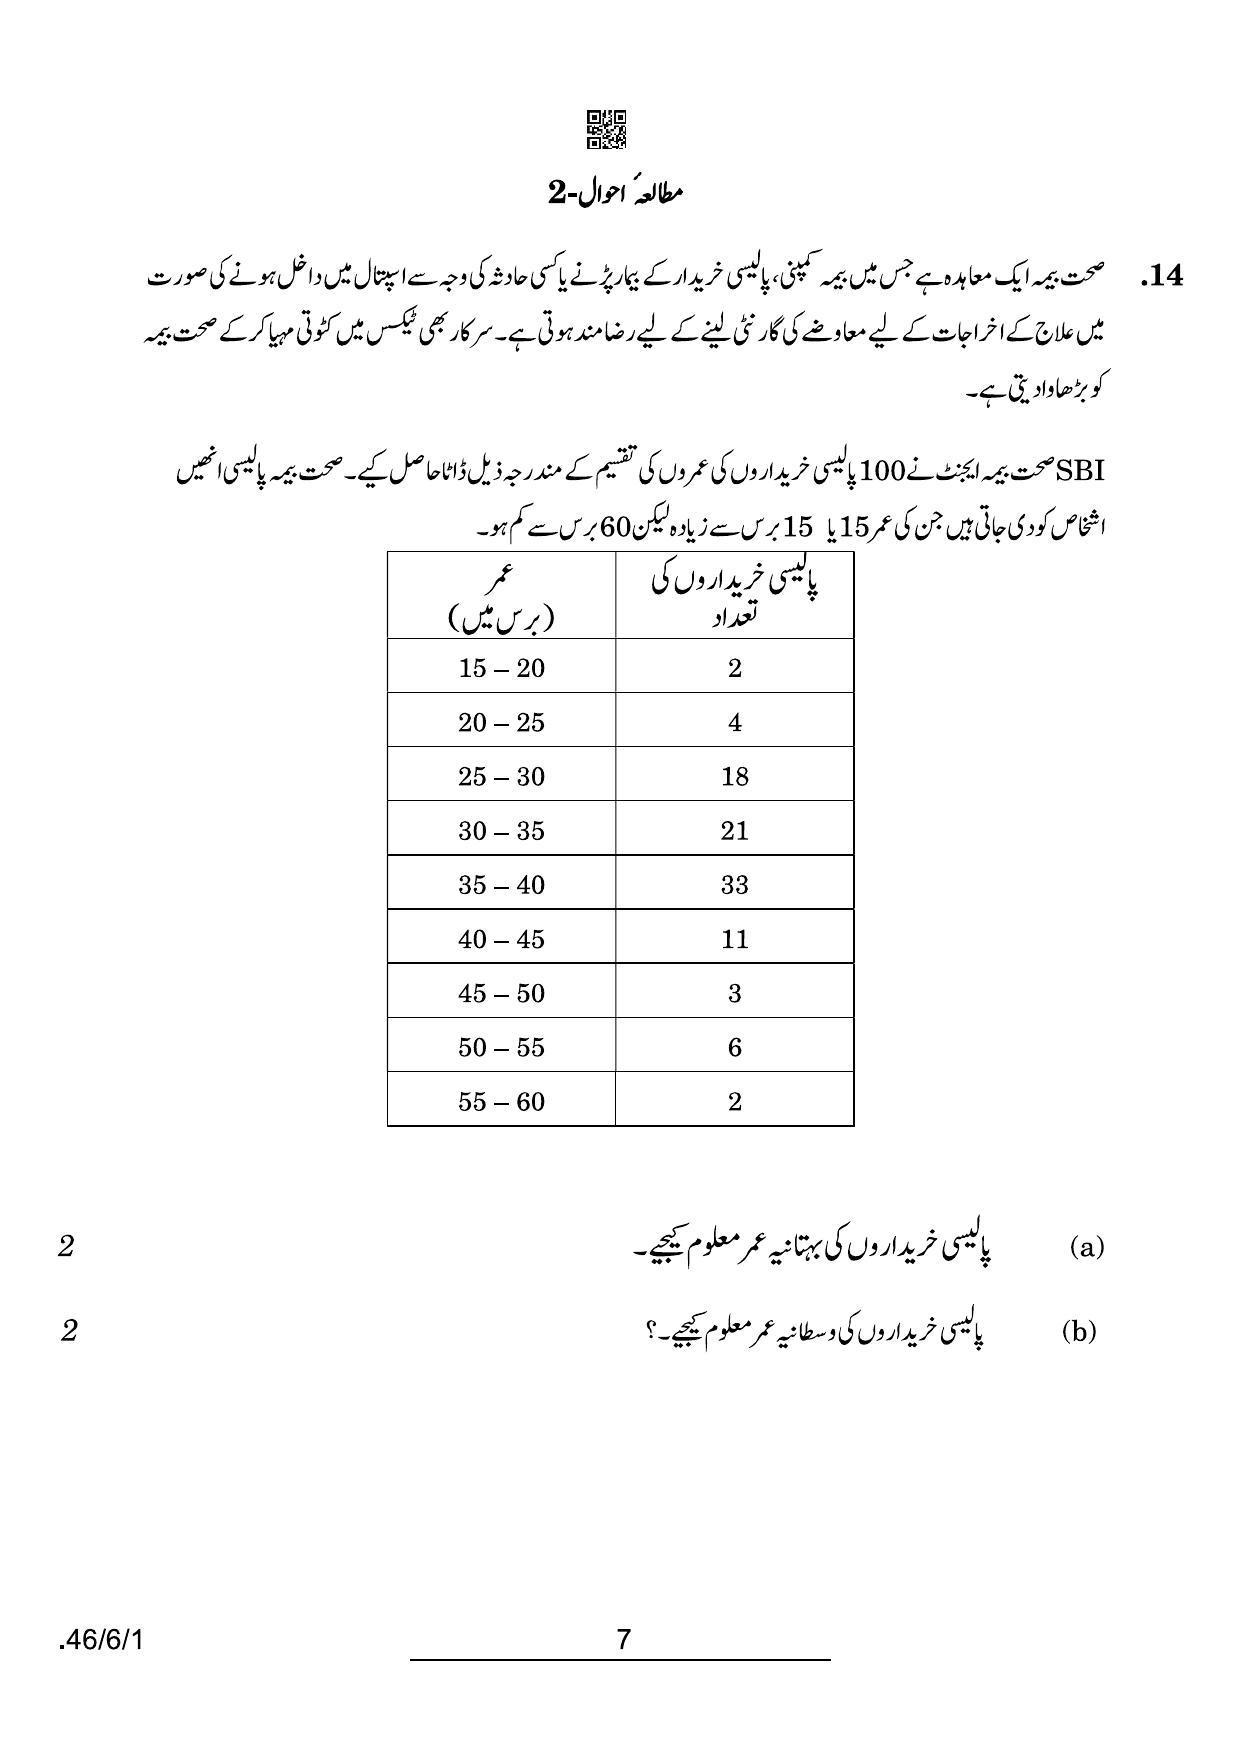 CBSE Class 10 46-6-1 Maths Standard Urdu 2022 Compartment Question Paper - Page 7